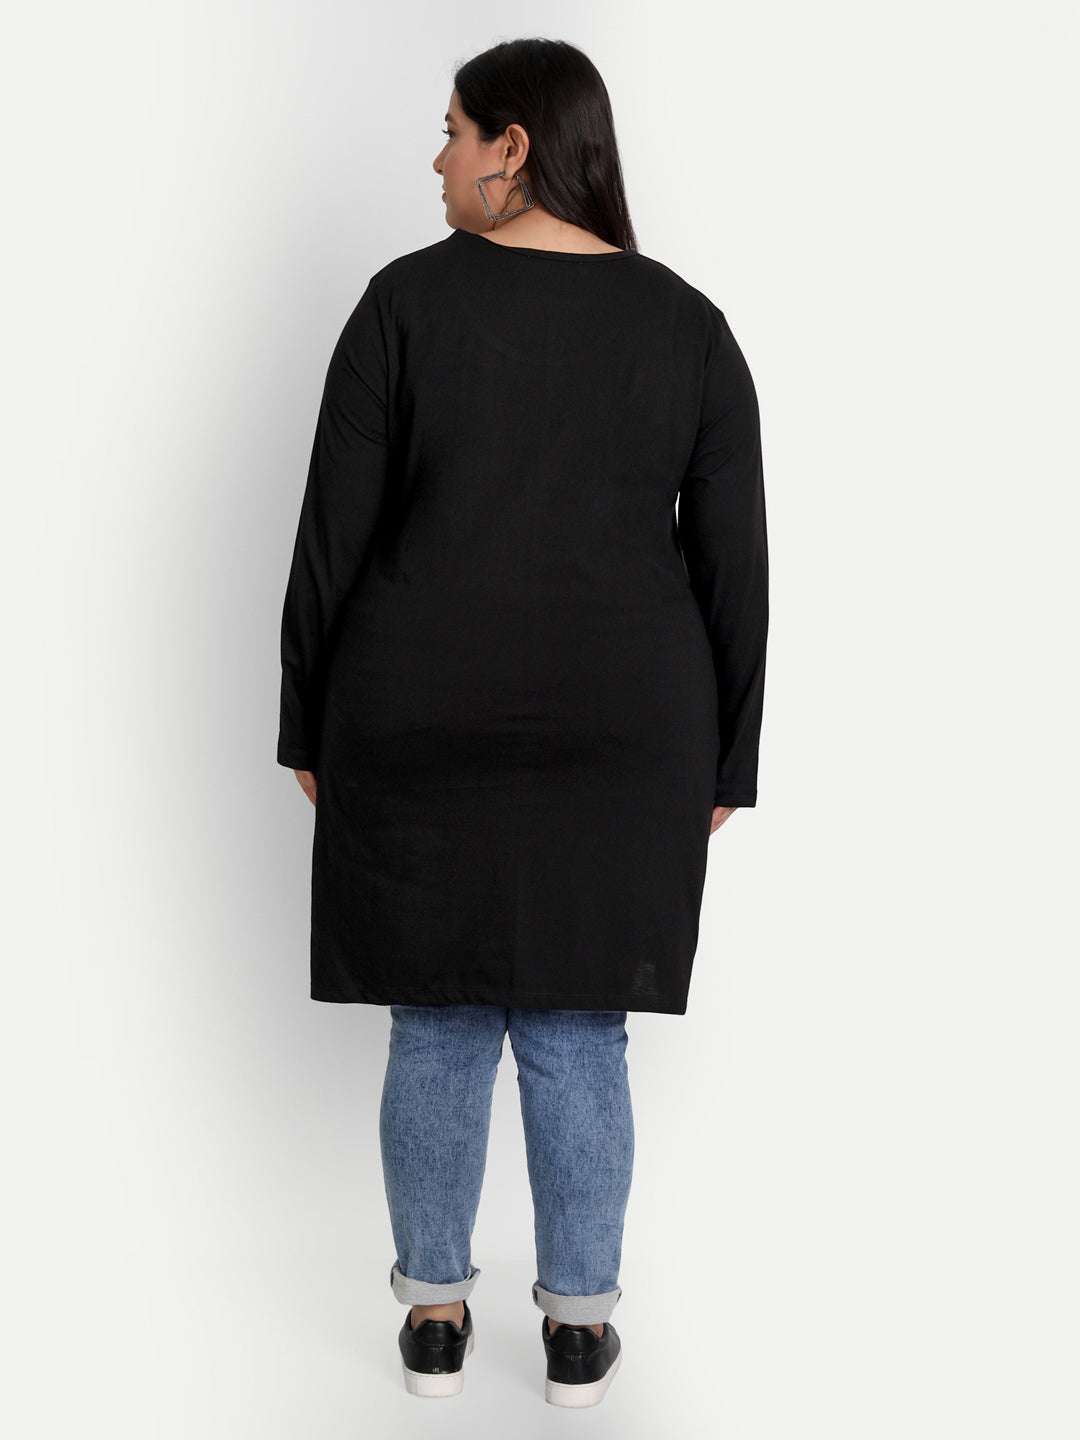 Plus Size Cotton Long Tops for Women Full Sleeves - Pack of 2 (Lavender & Black)